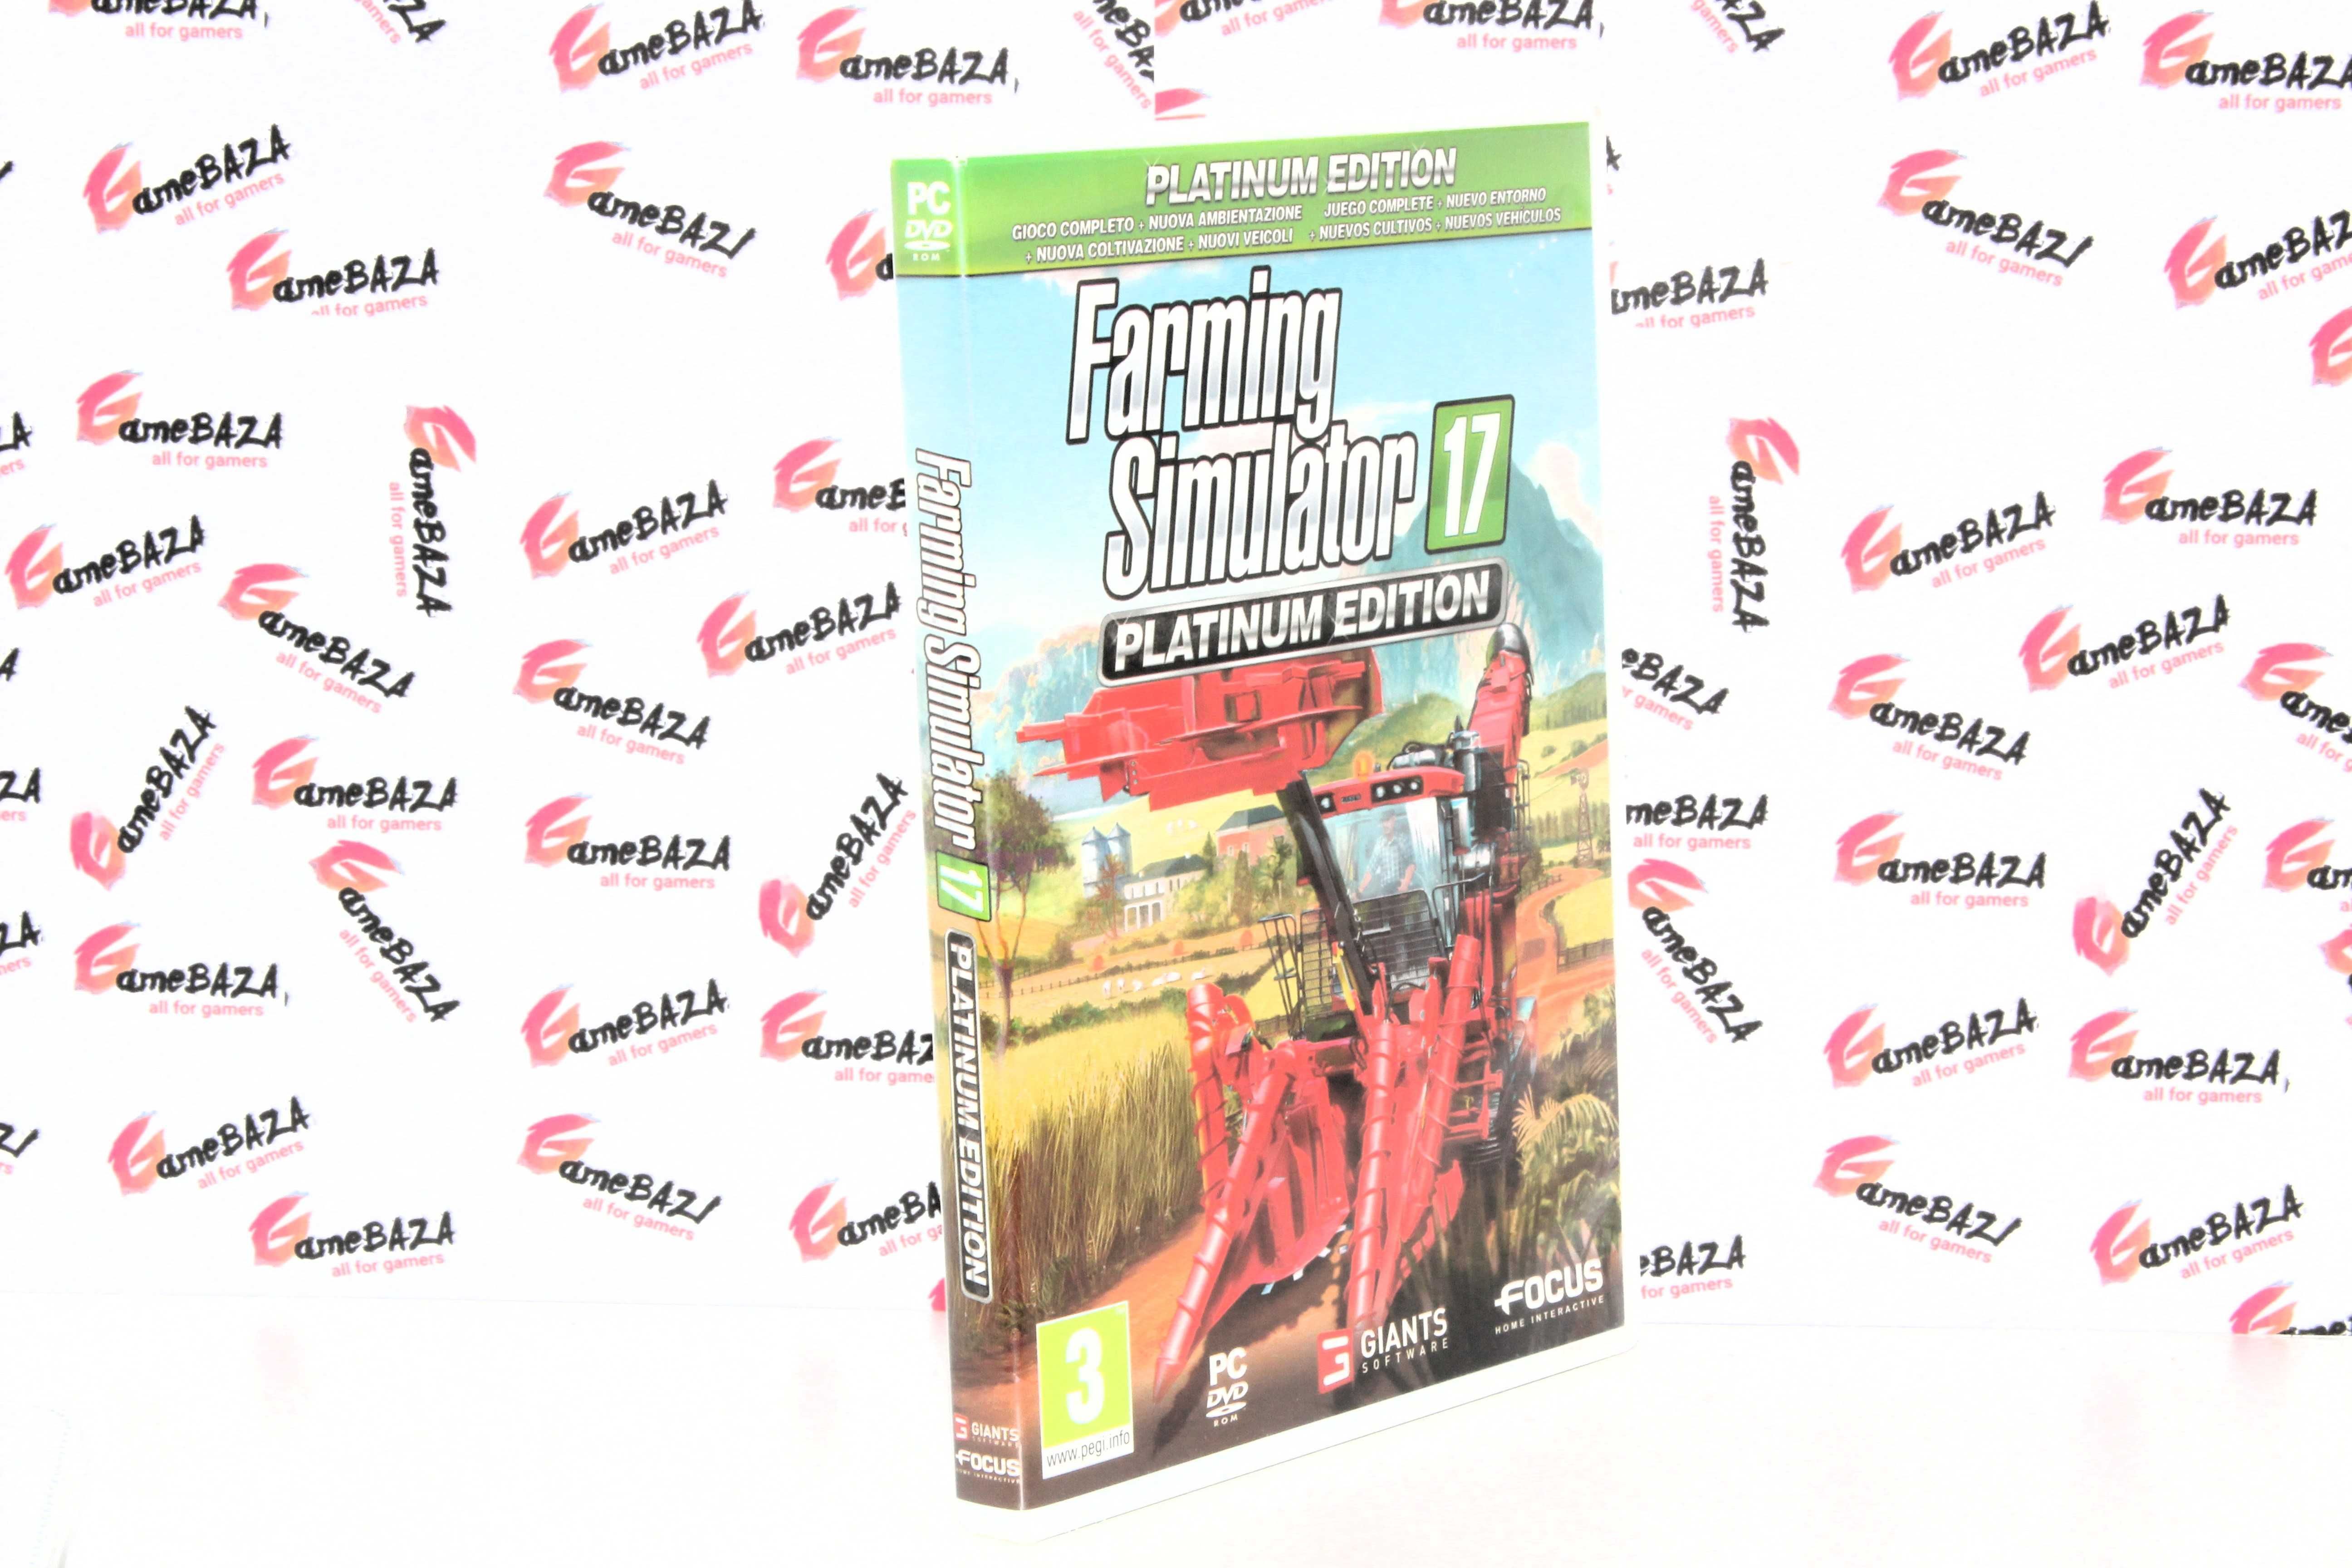 Farming Simulator 17 PC GameBAZA